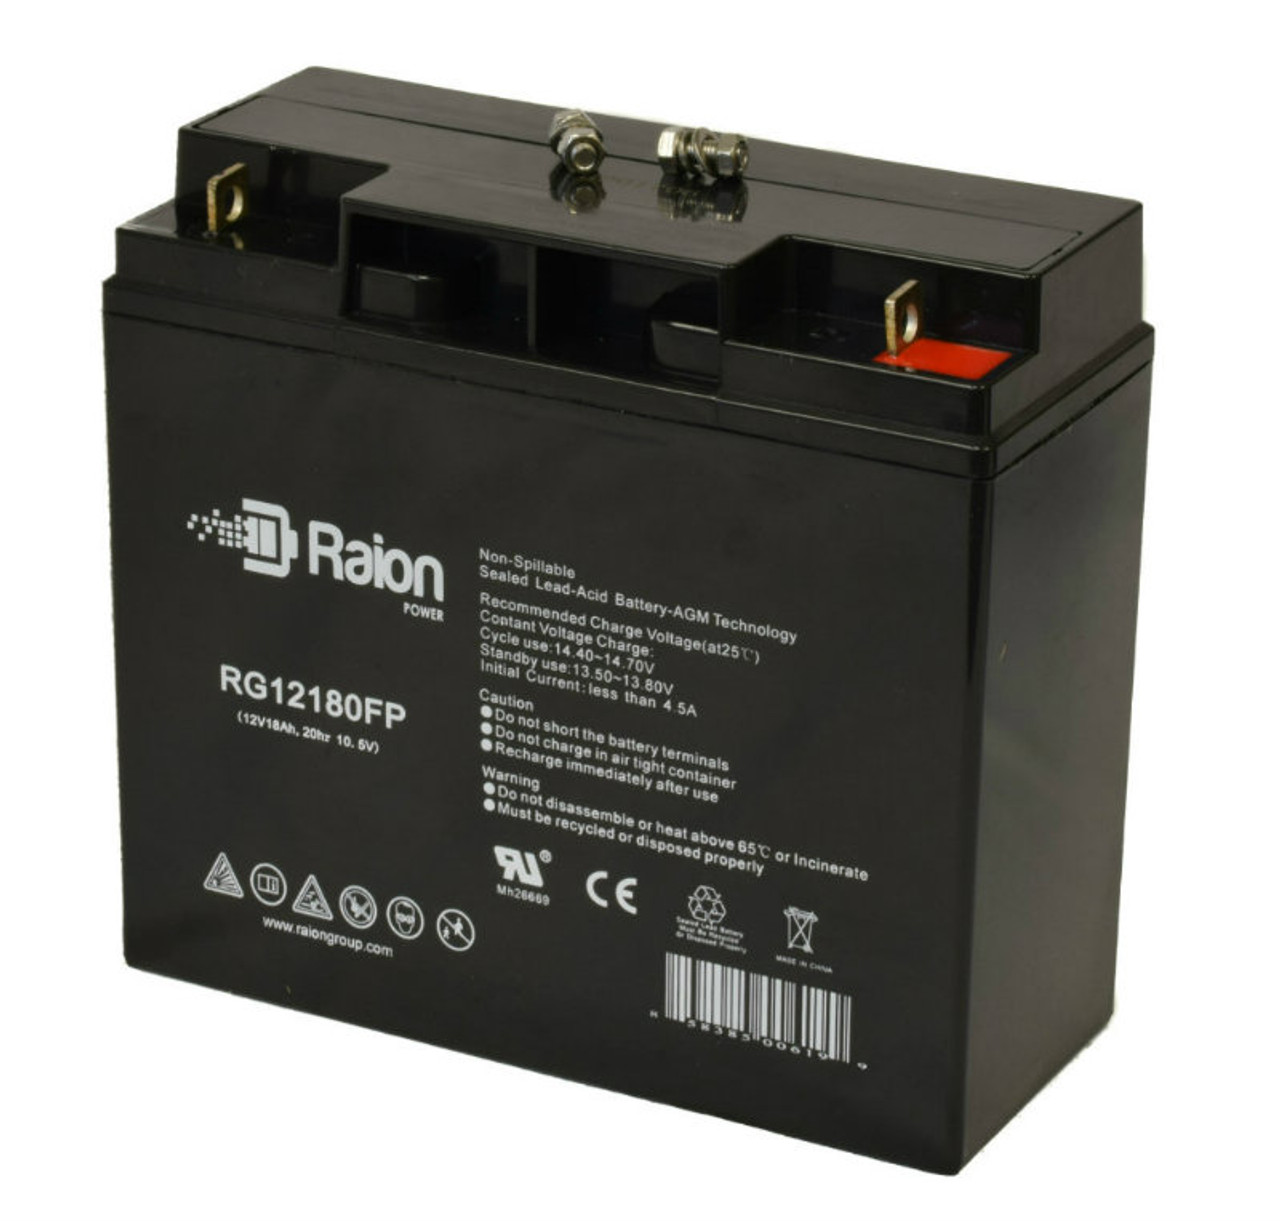 Raion Power Replacement 12V 18Ah Battery for Golden Technologies Buzzaround XL GB146 BLUE Electric Wheelchair